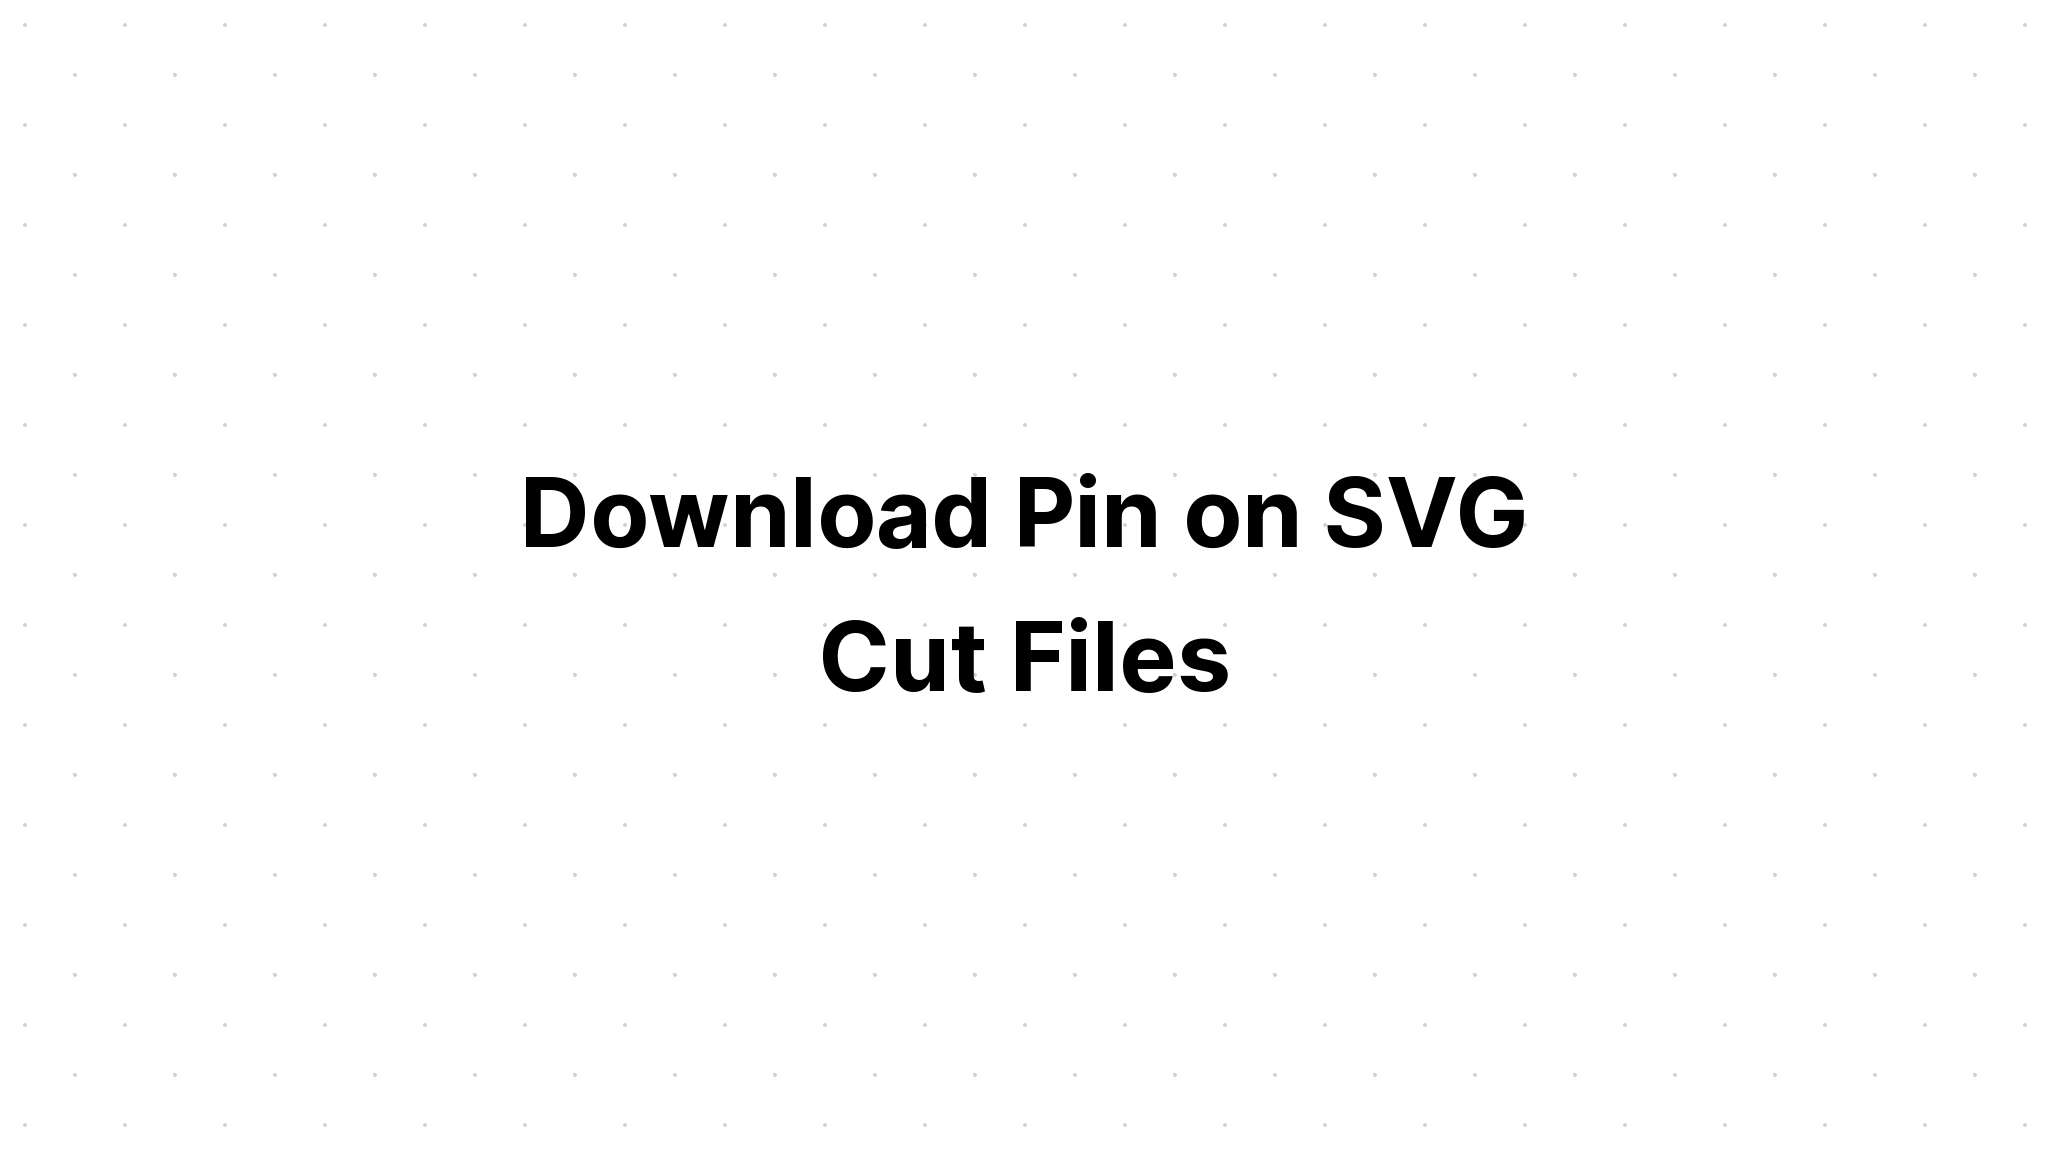 Download Tags Svg Cut File SVG File